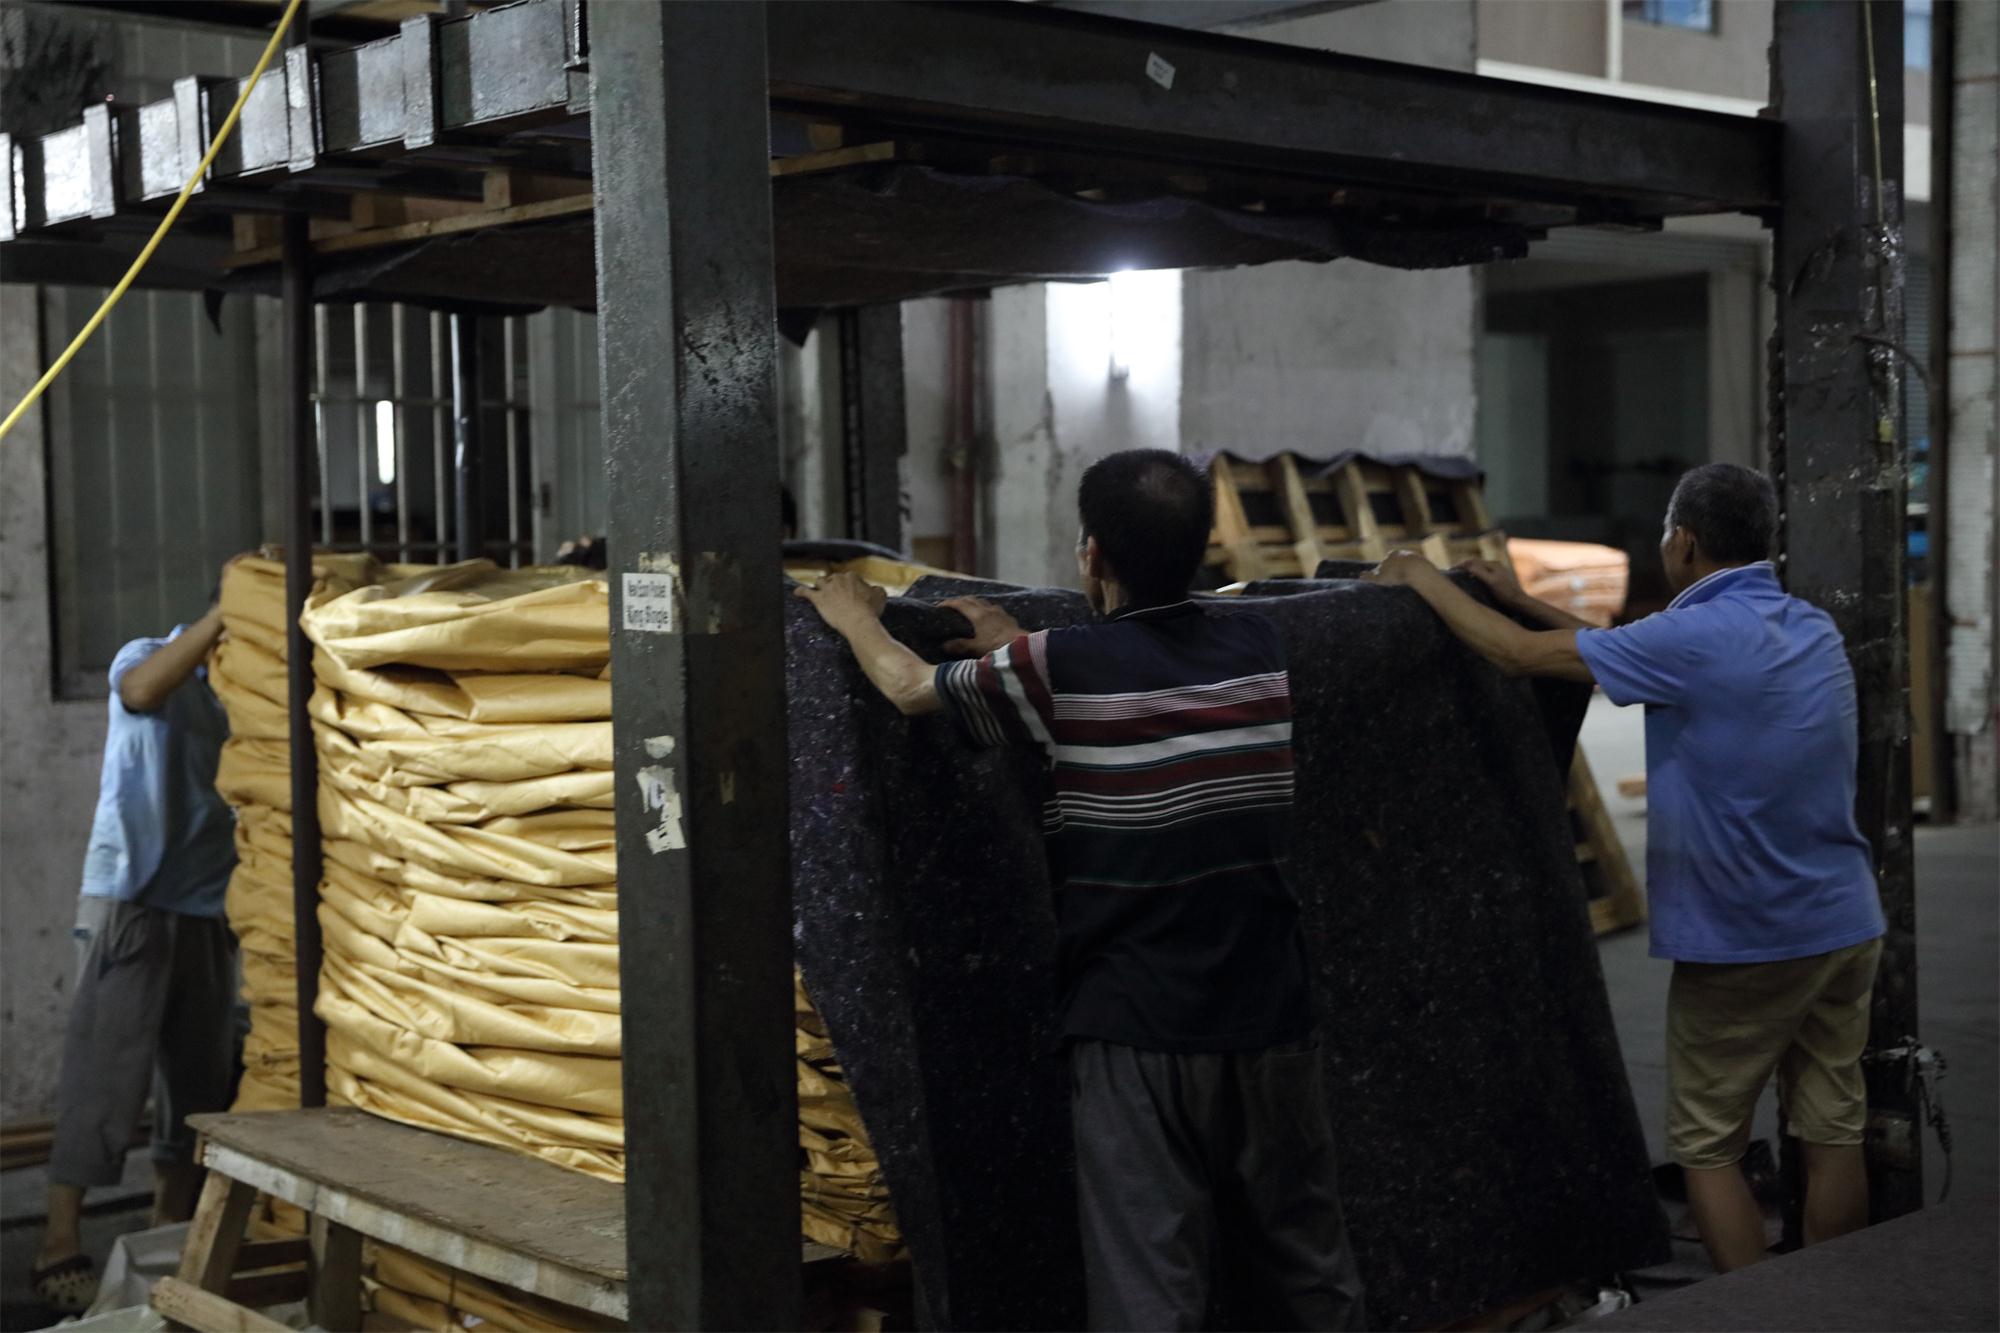 spring mattress manufacturers in pakistan